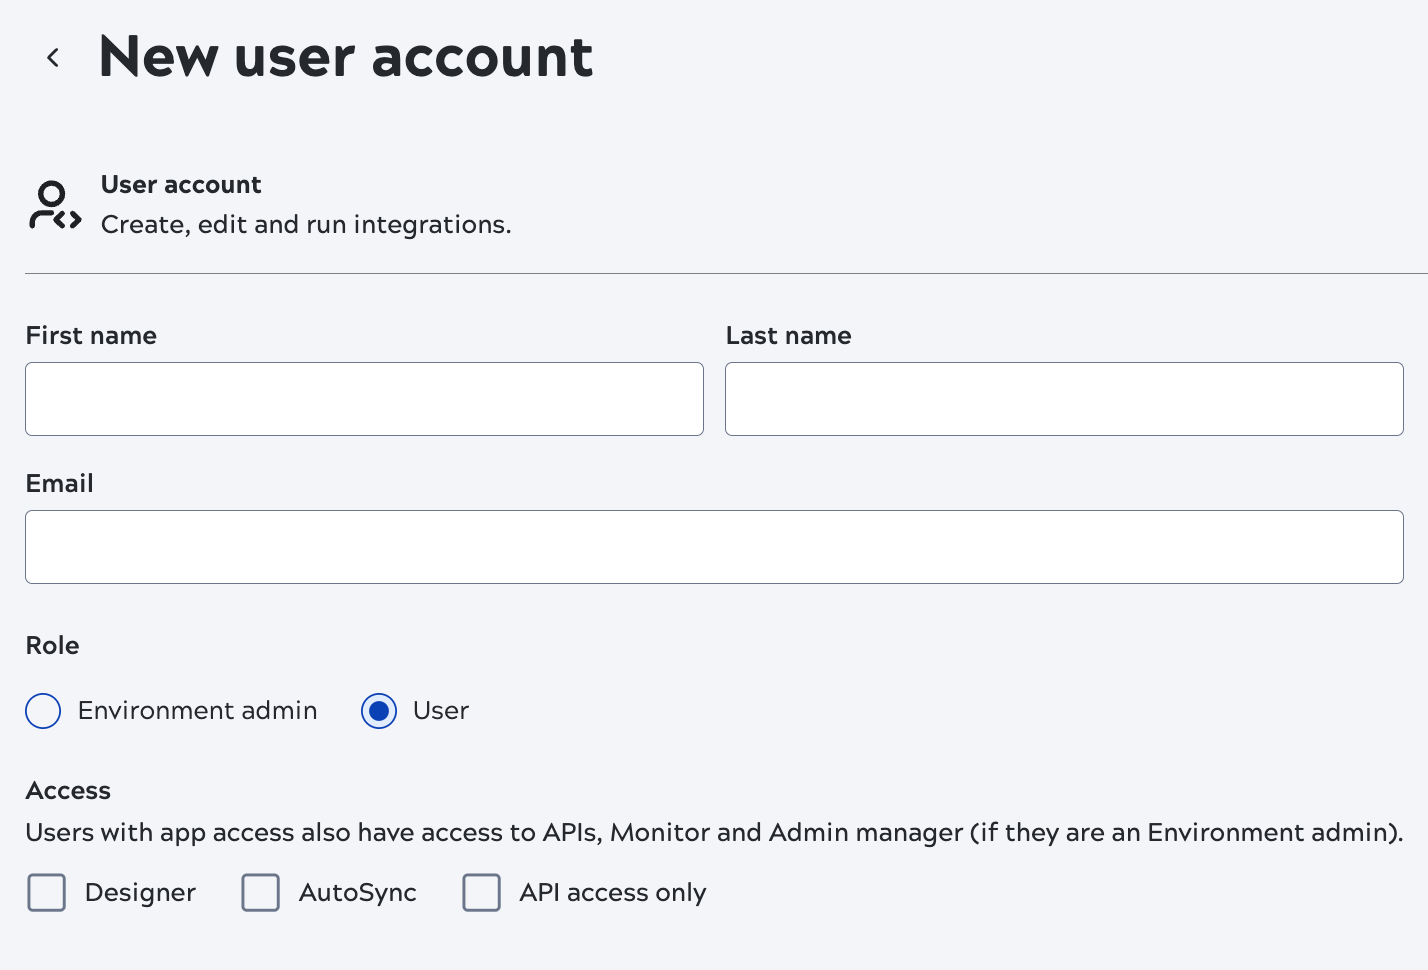 New user account options